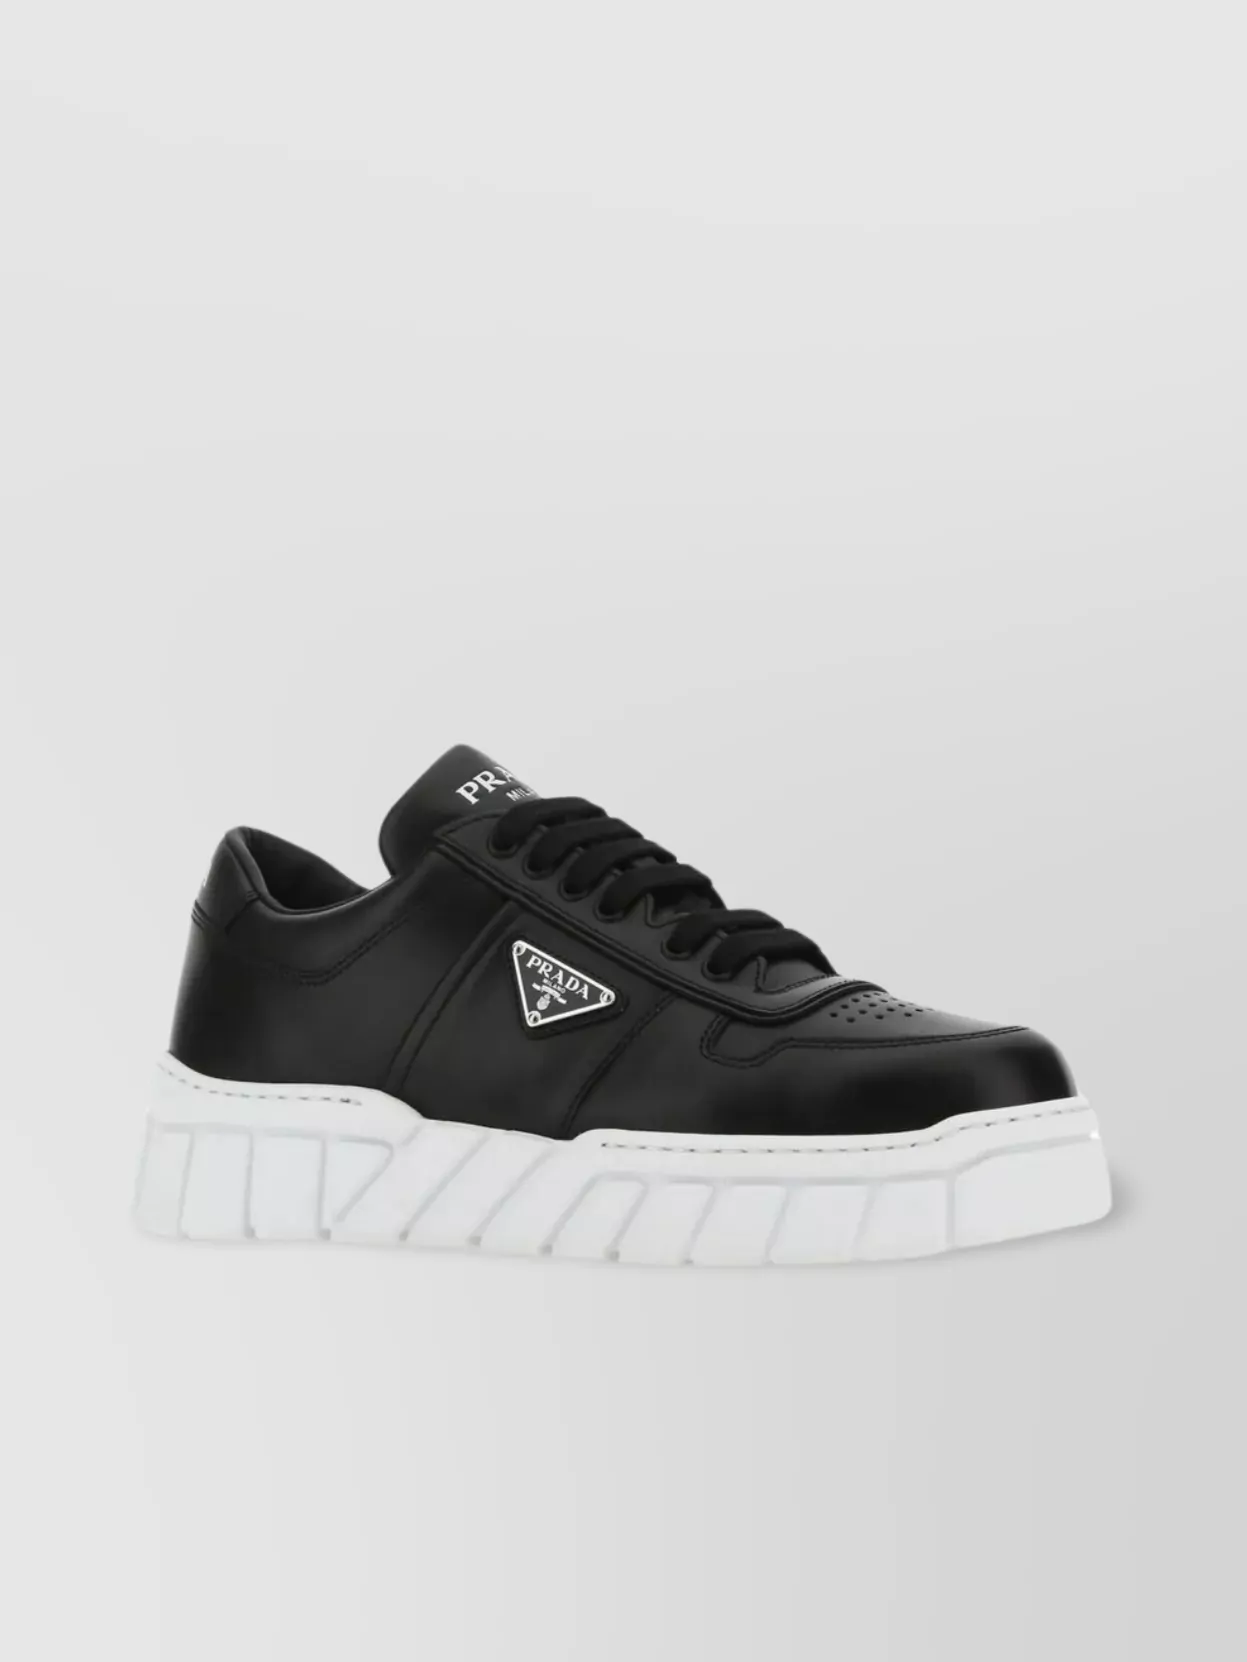 Prada Padded Nappa Leather Sneakers In Black